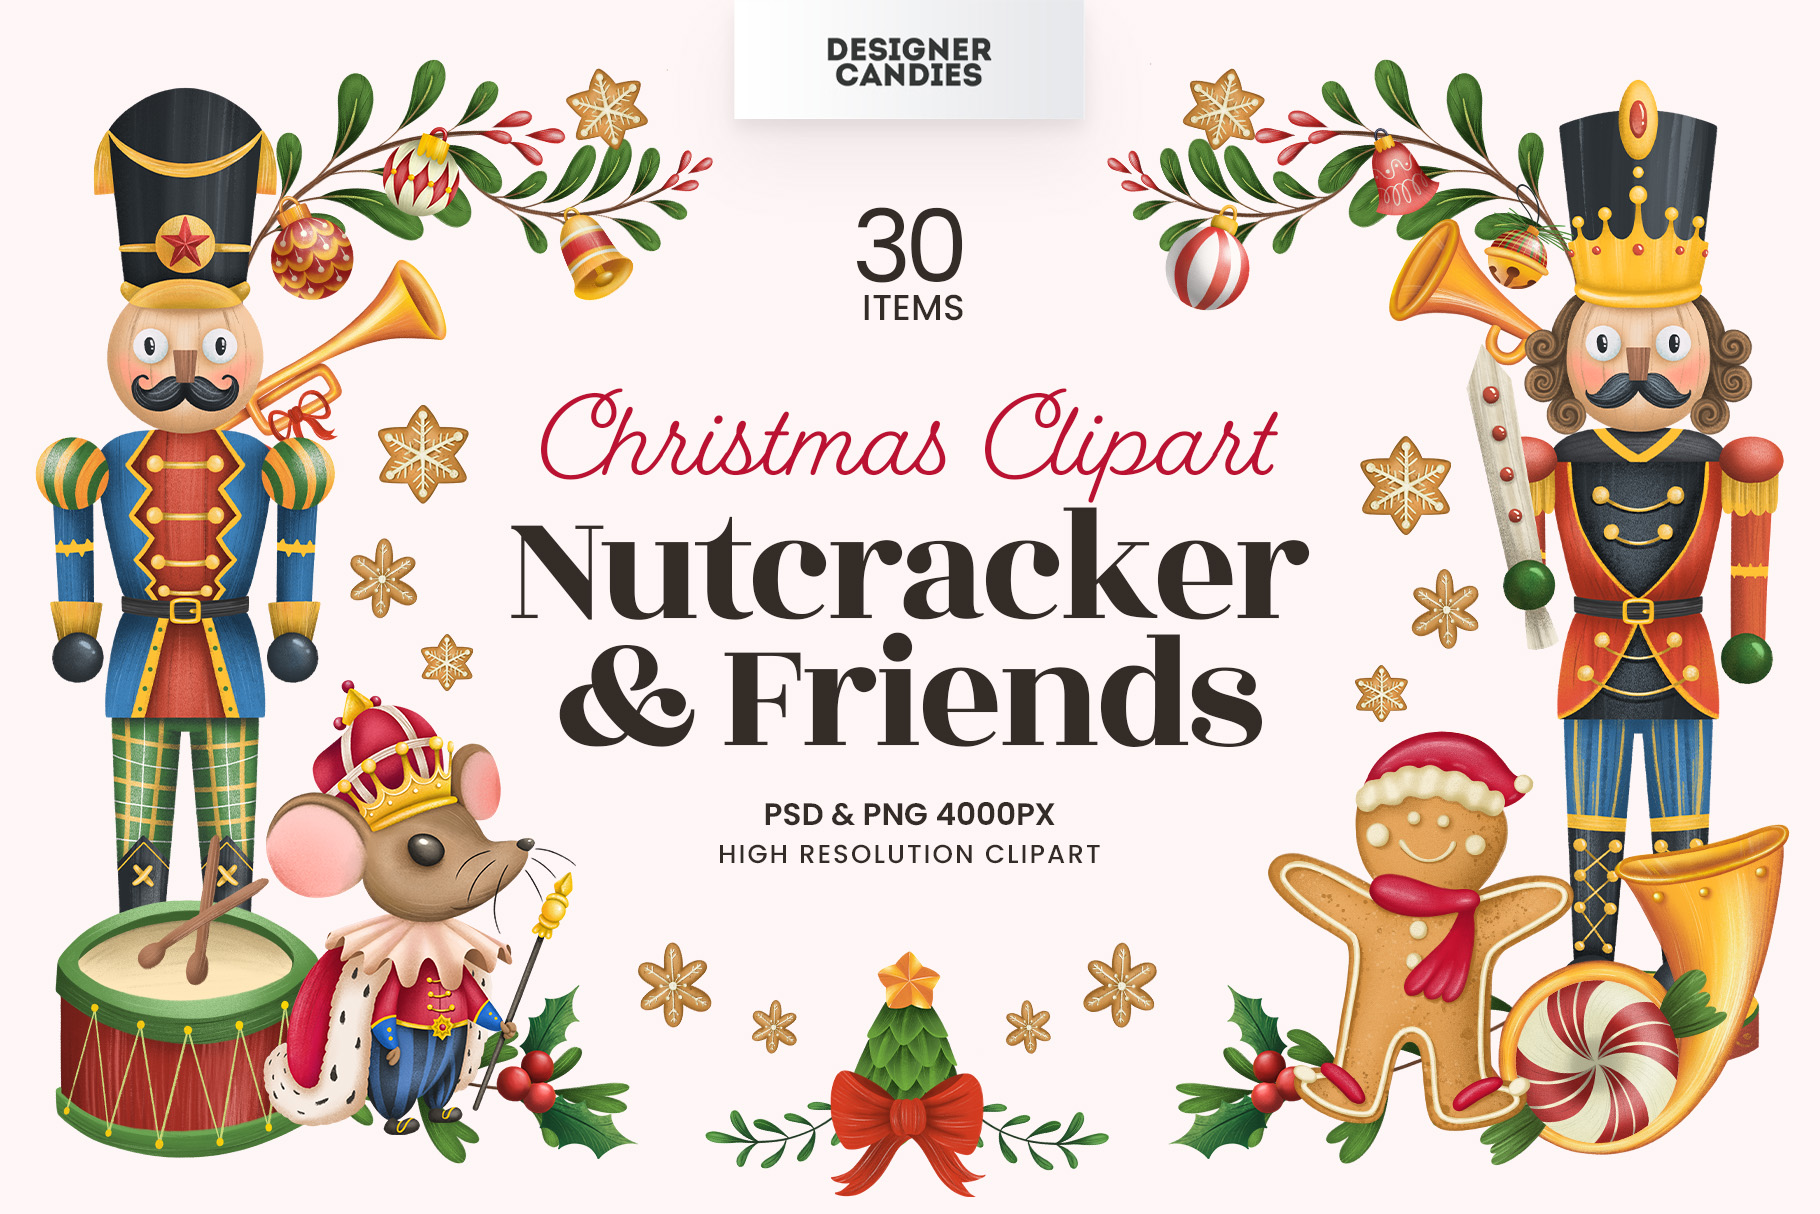 Christmas Clipart Illustrations - Nutcracker & Friends (PSD, PNG, PAT Format)